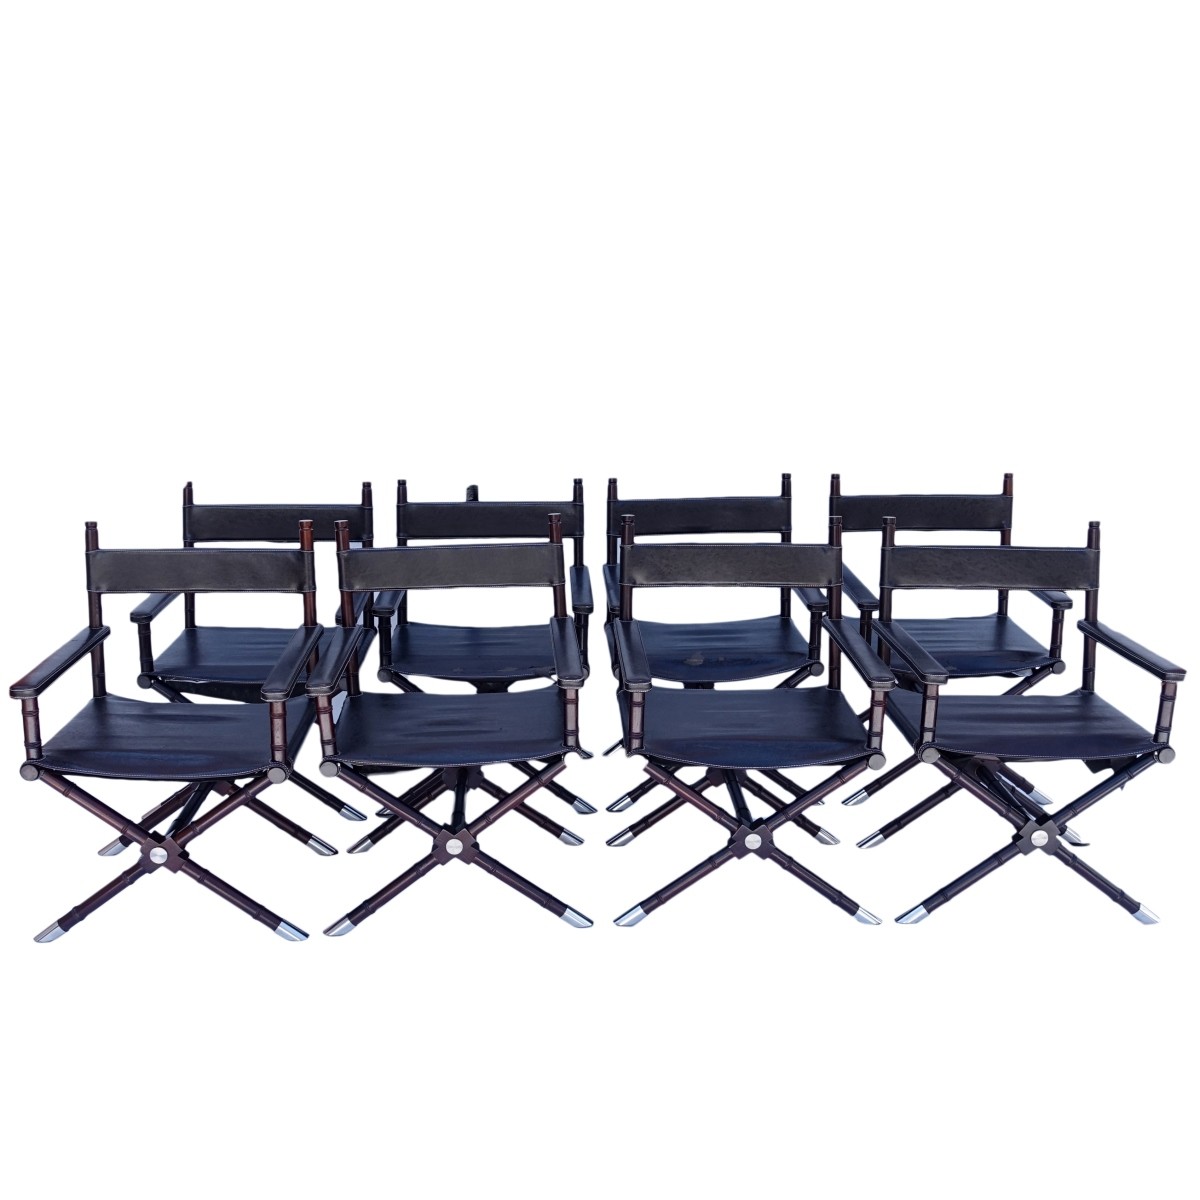 Ralph Lauren Style Director's Chairs